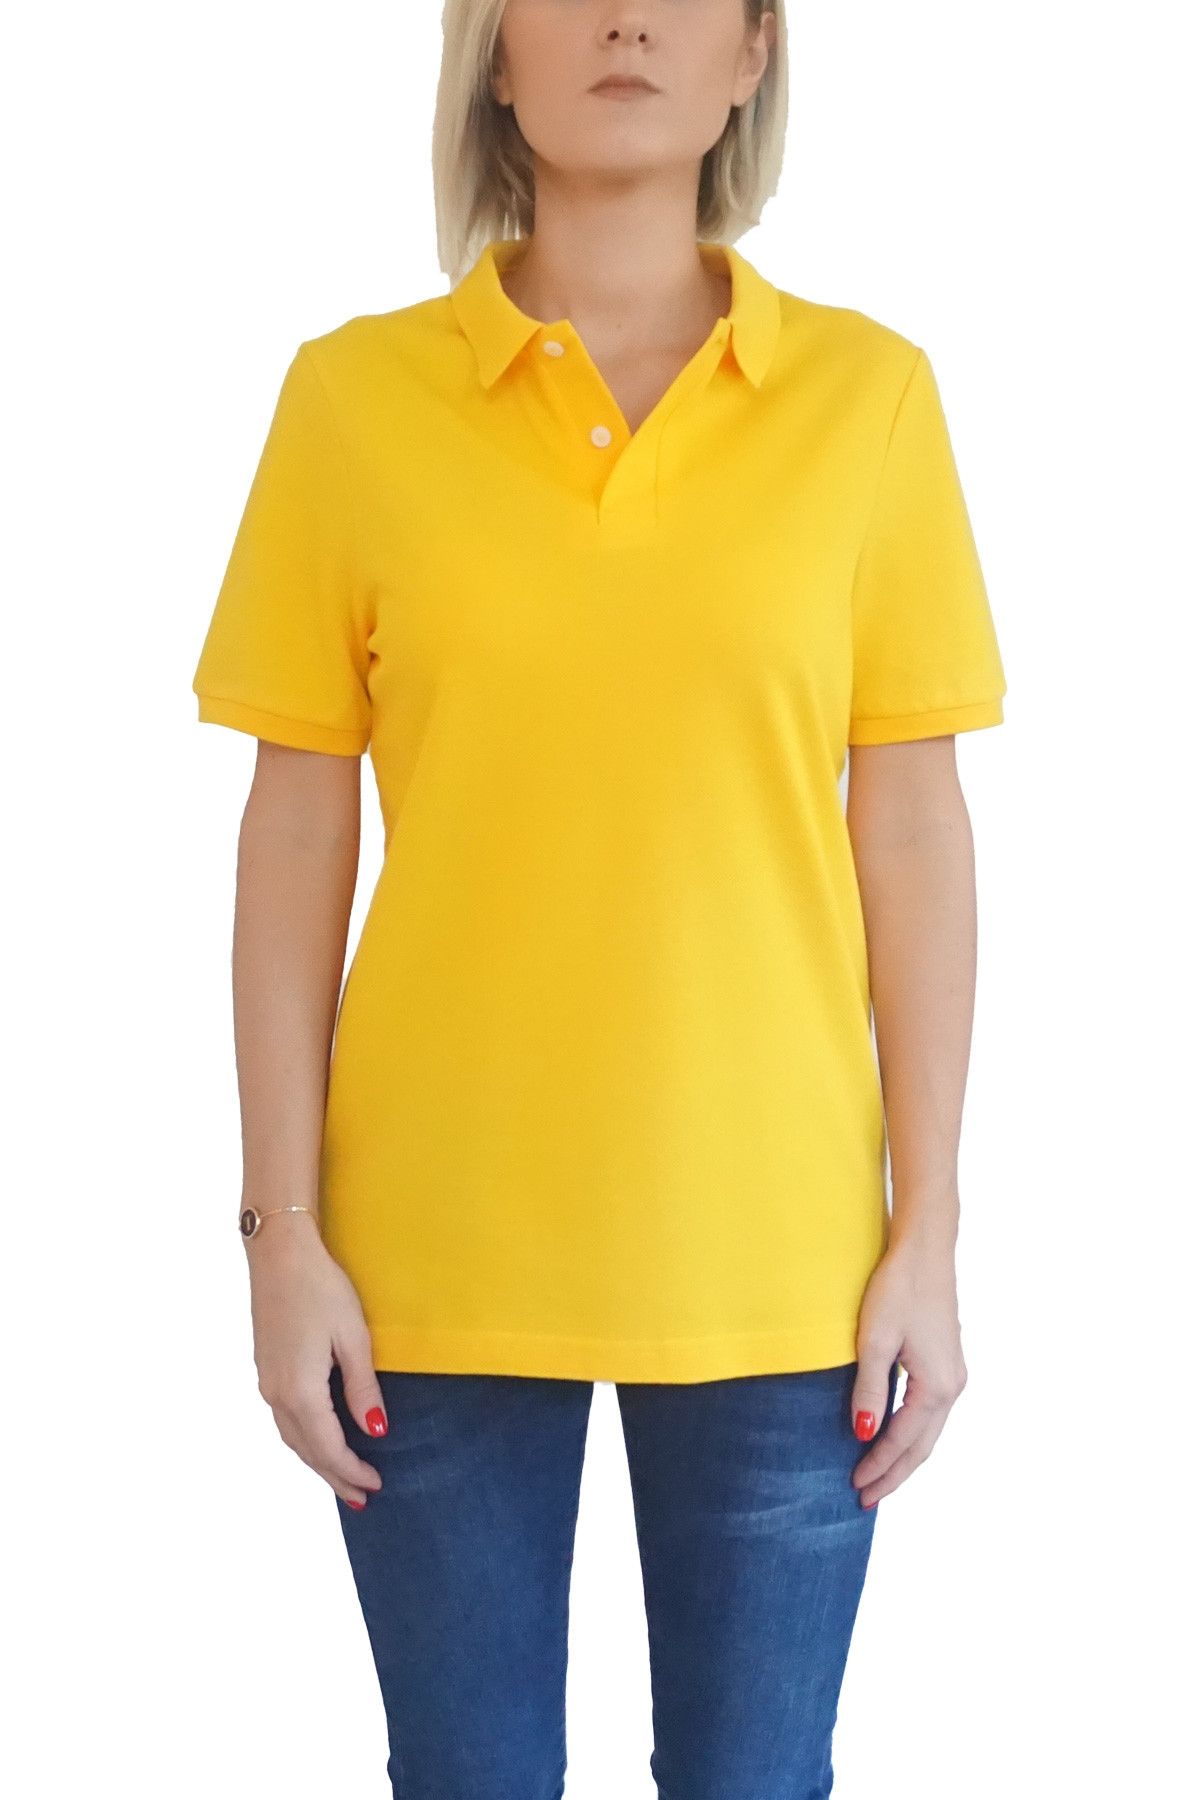 Mof Basics Kadın Sarı T-Shirt POLO-F-SA